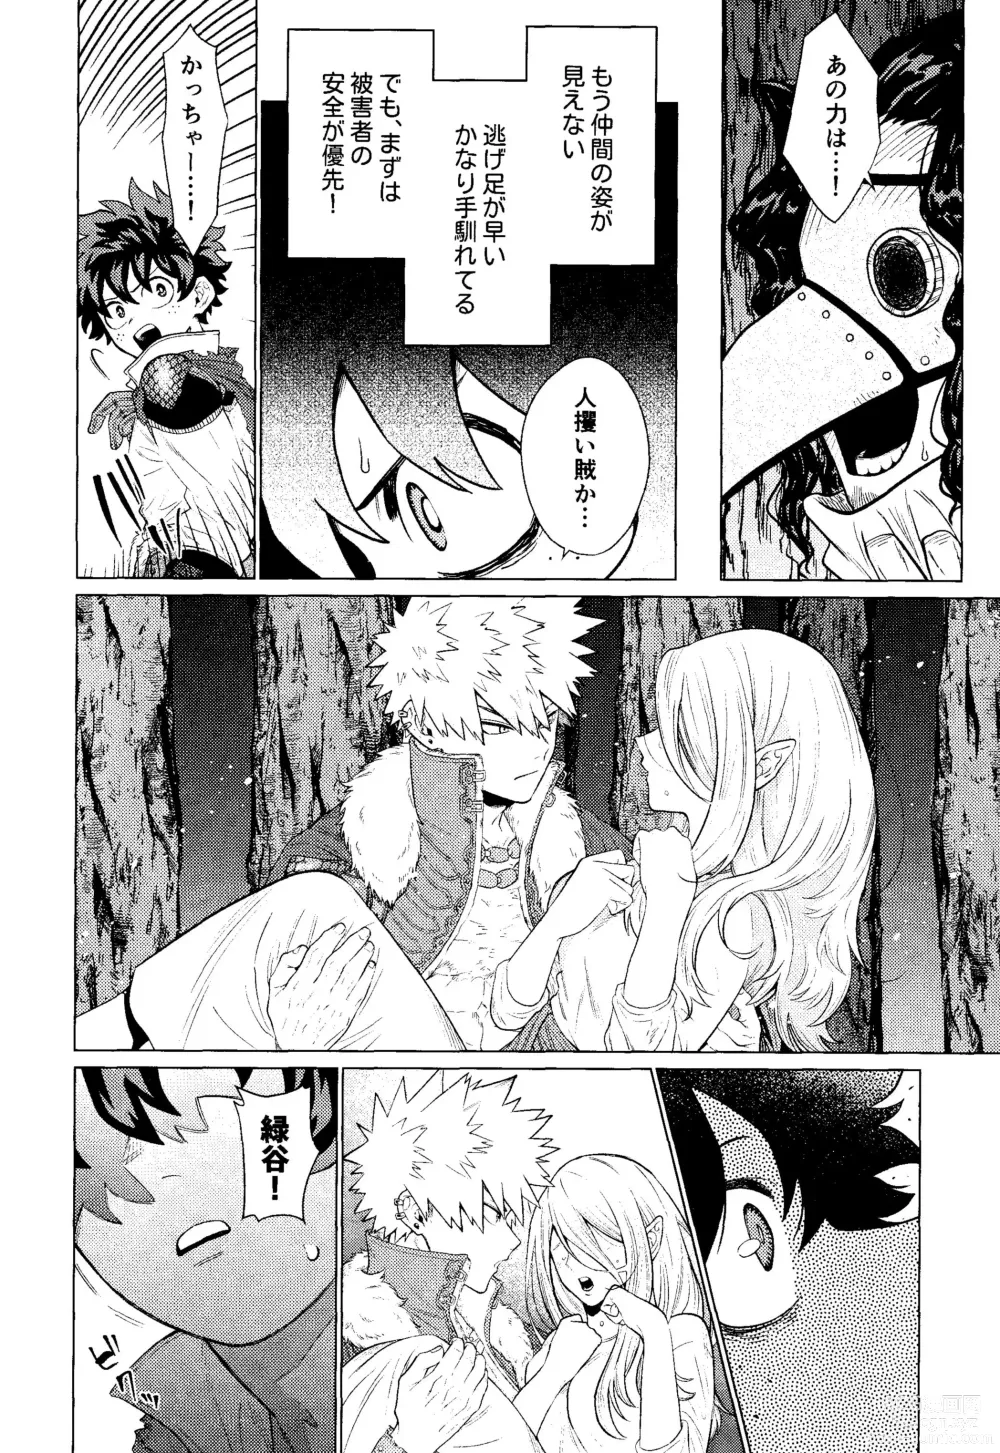 Page 11 of doujinshi Ubatte Nusumareru - Robbed and stolen